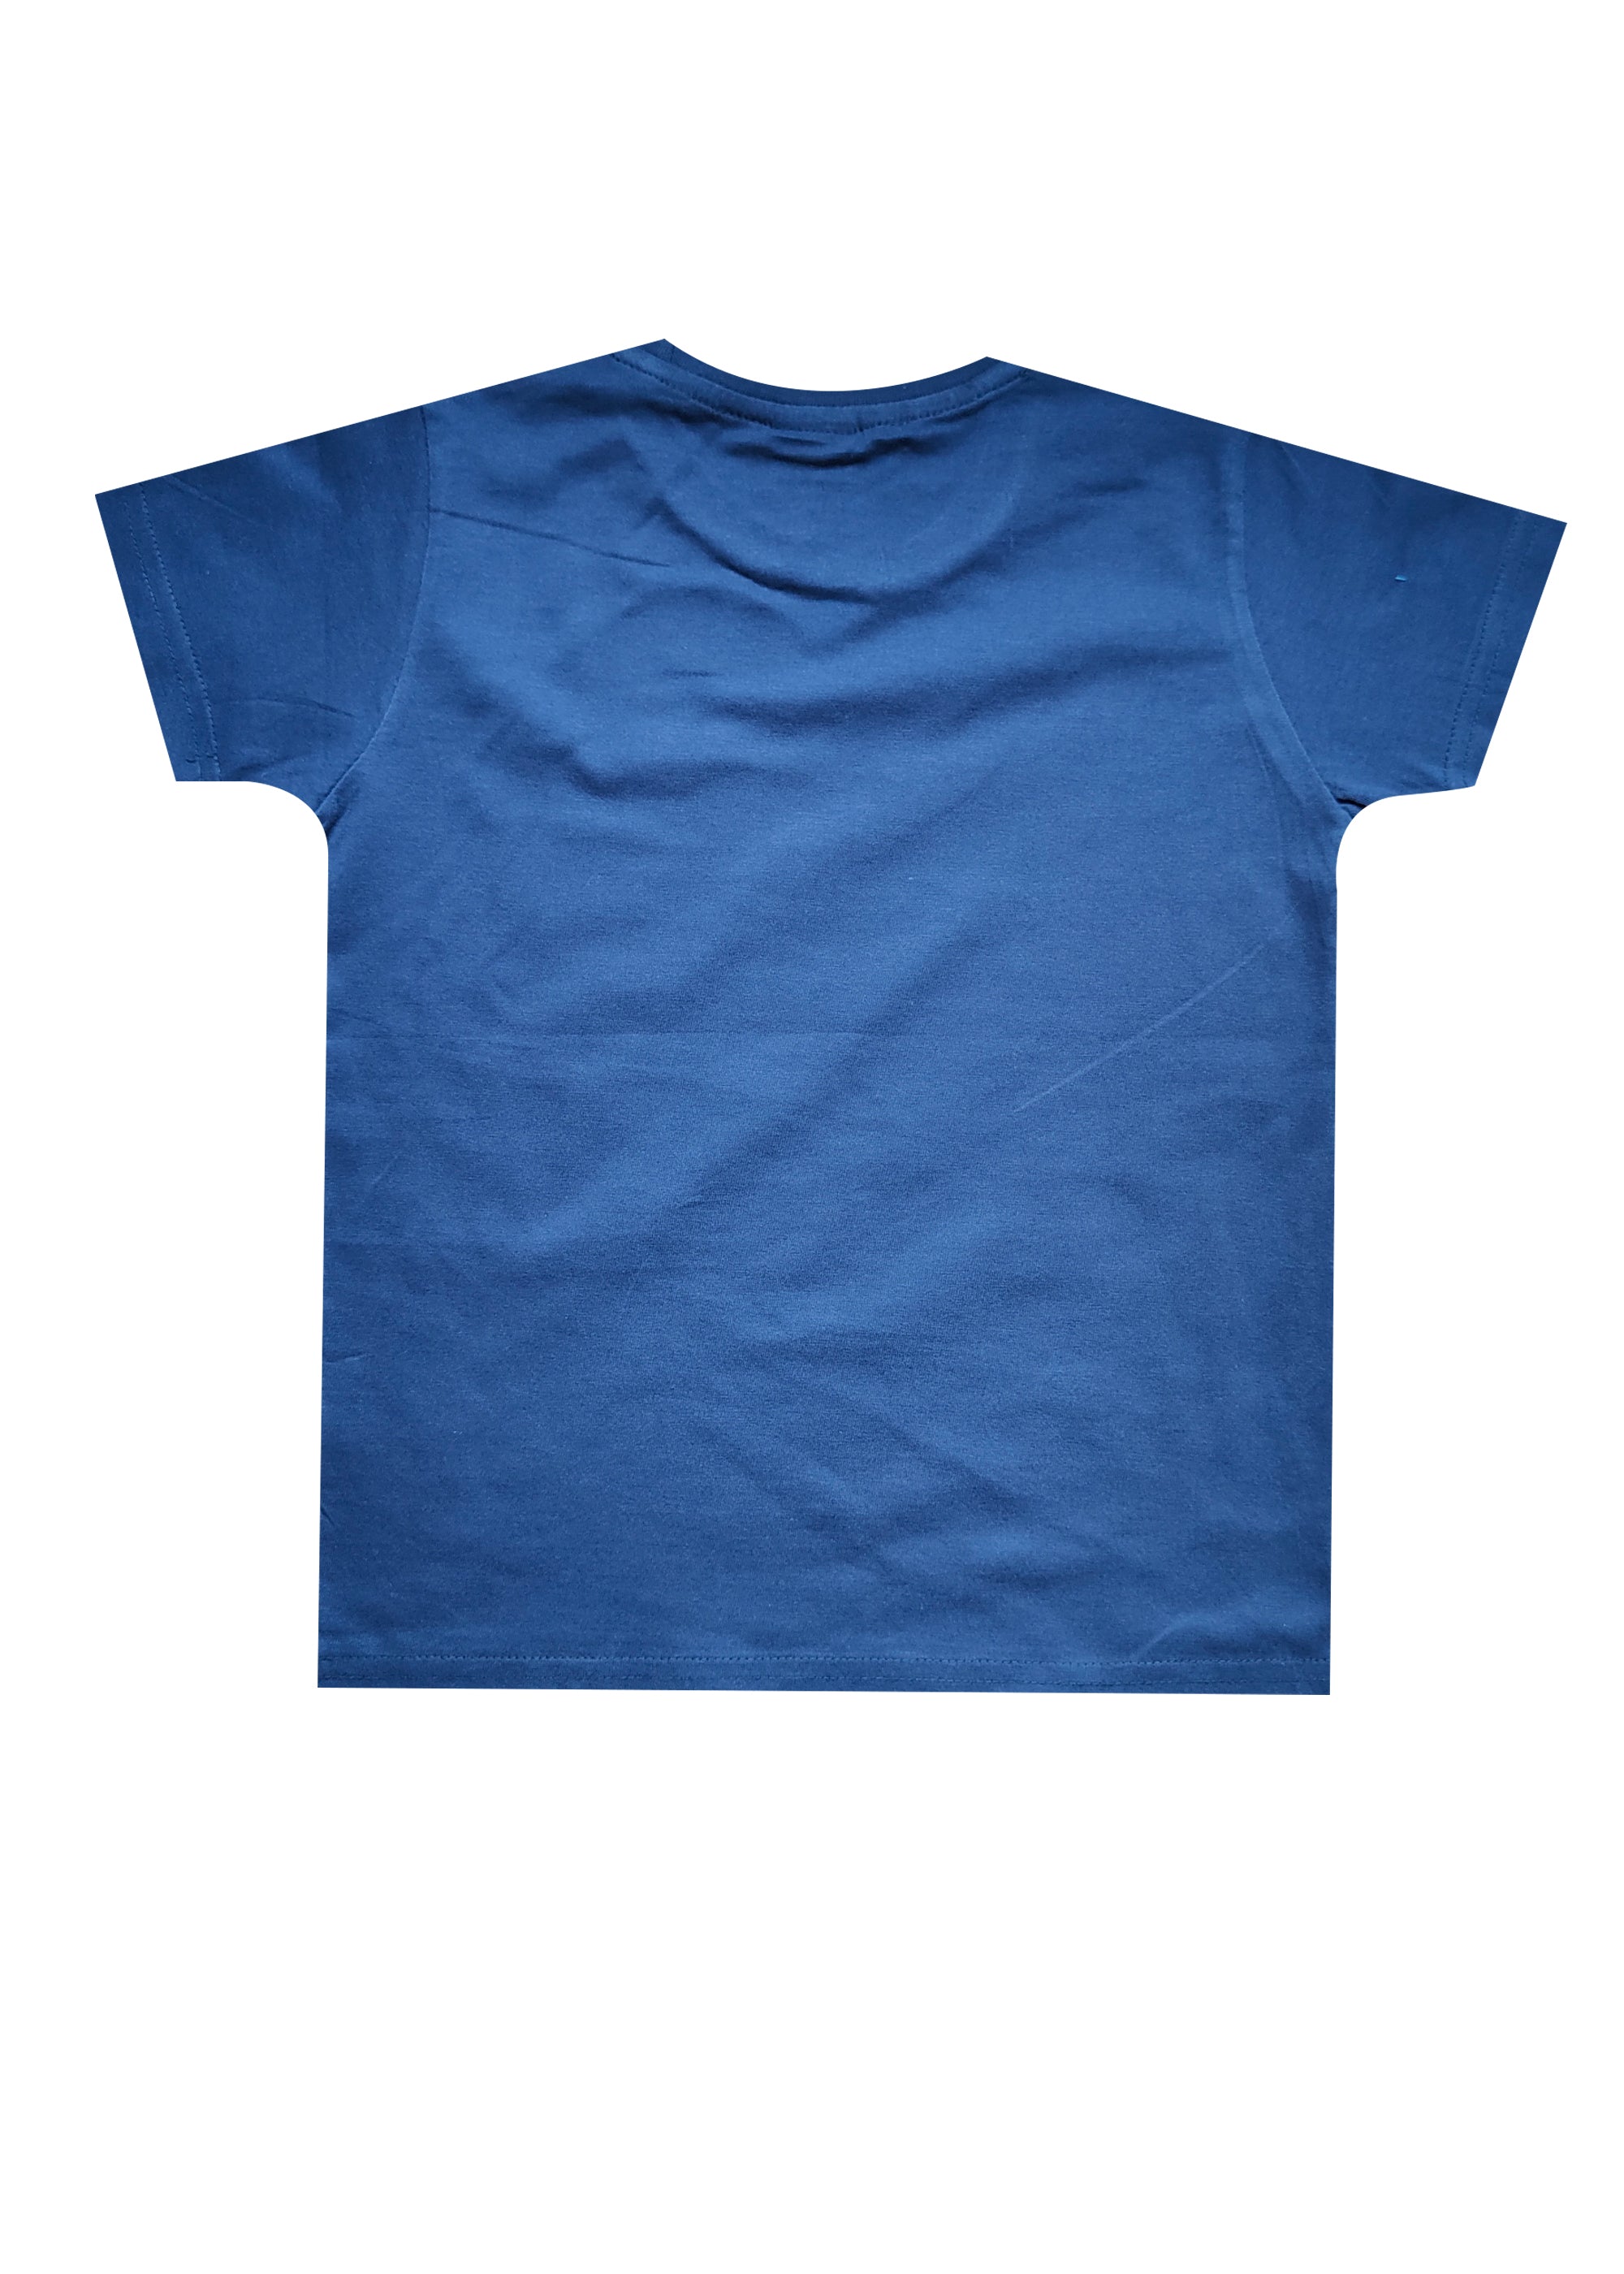 Baby Shark Star Badge Kid's T-Shirt